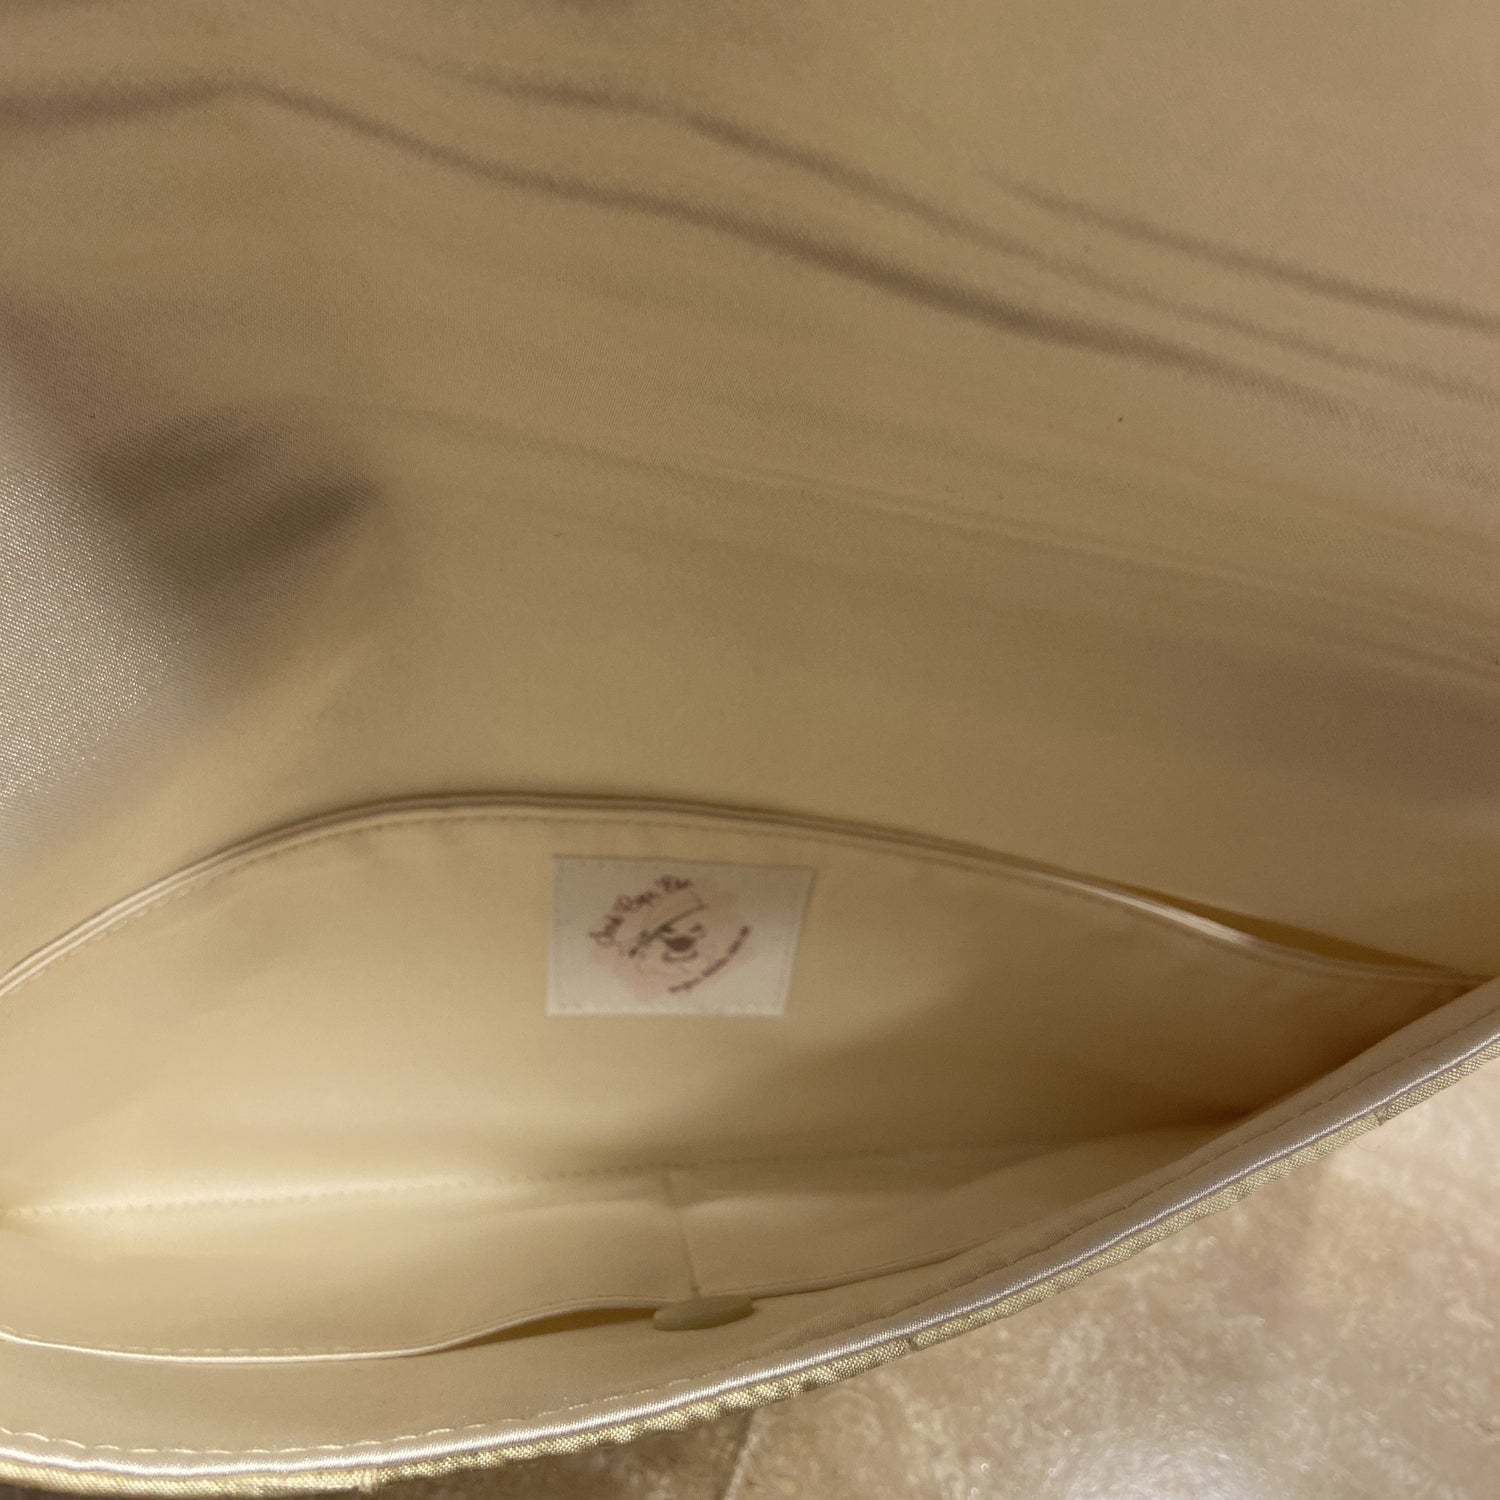 Handmade cream silk clutch handbag with brooch closure